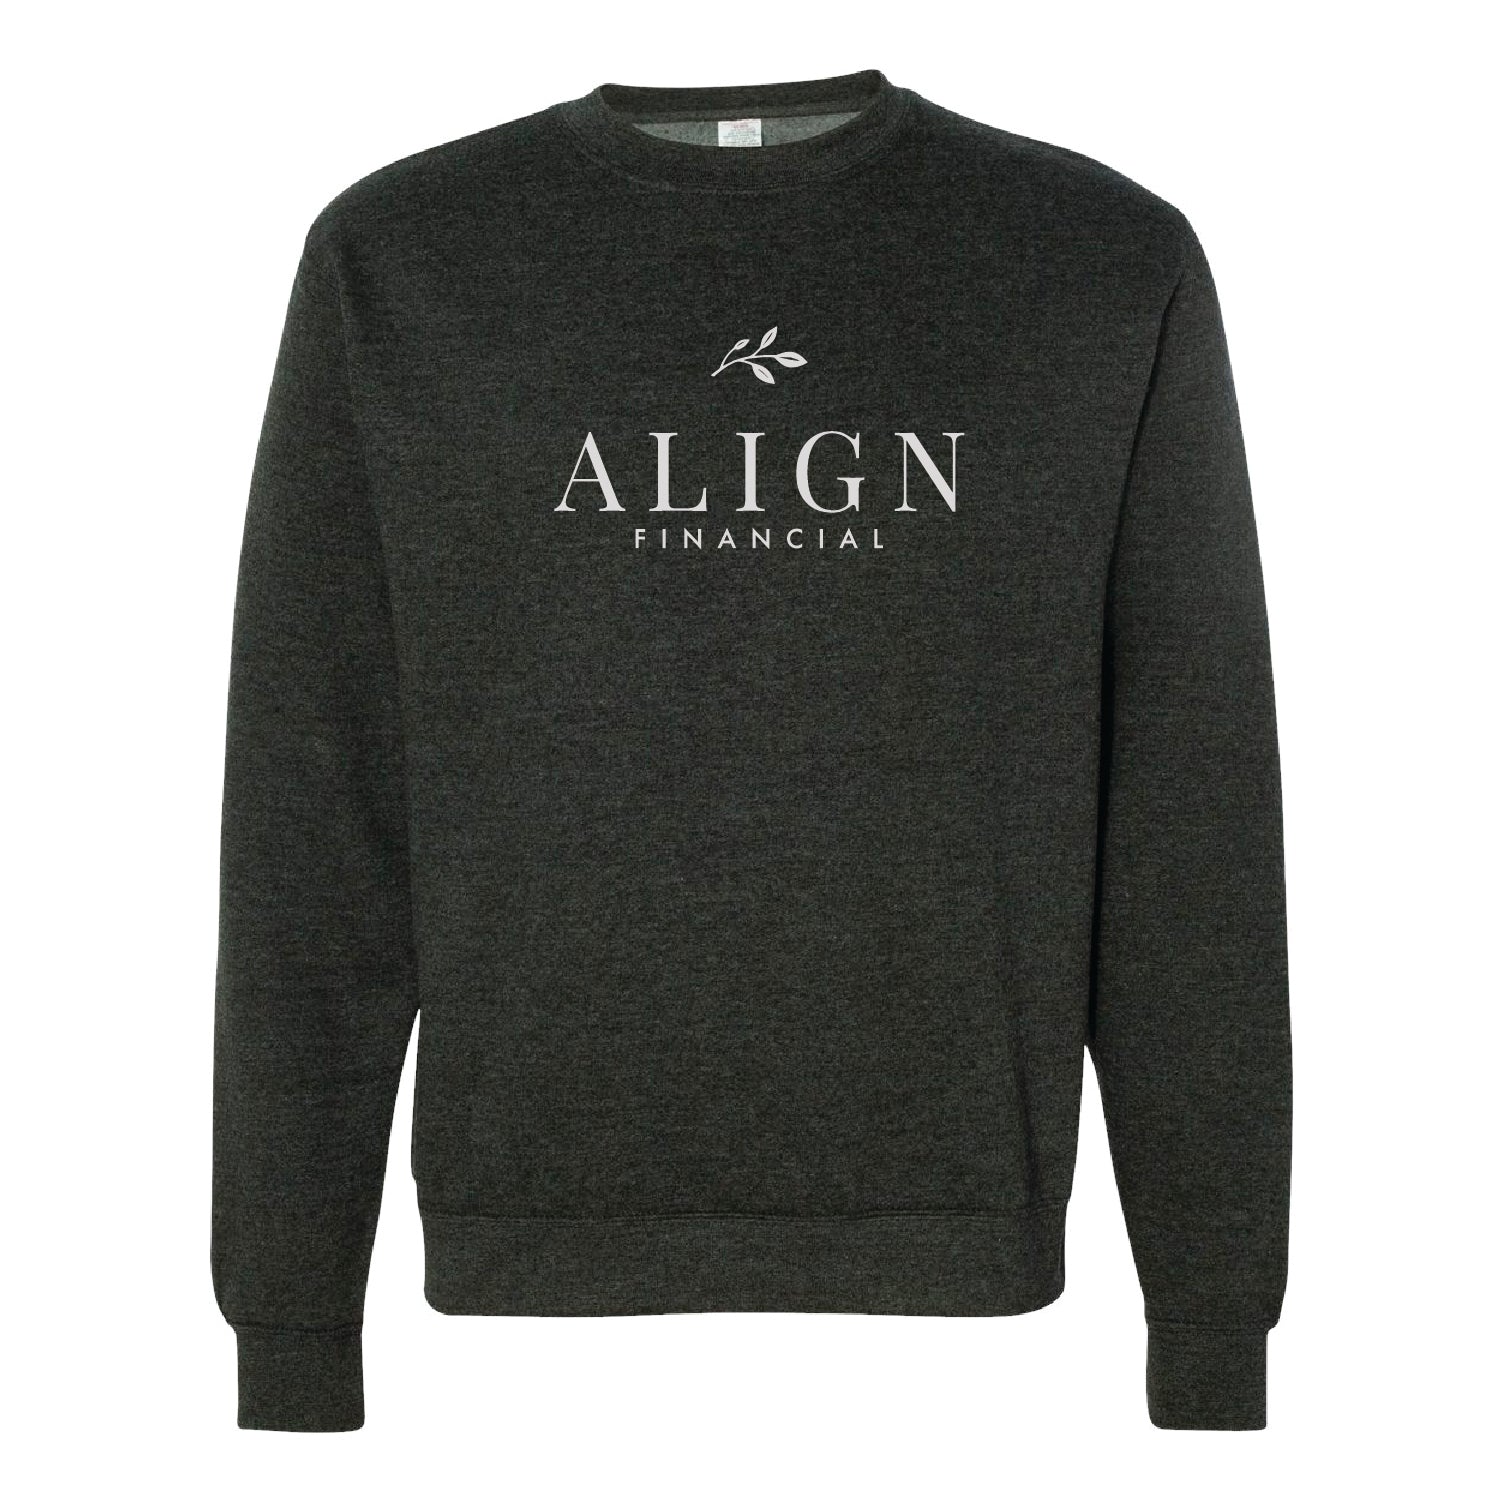 Align Financial Midweight Sweatshirt - DSP On Demand